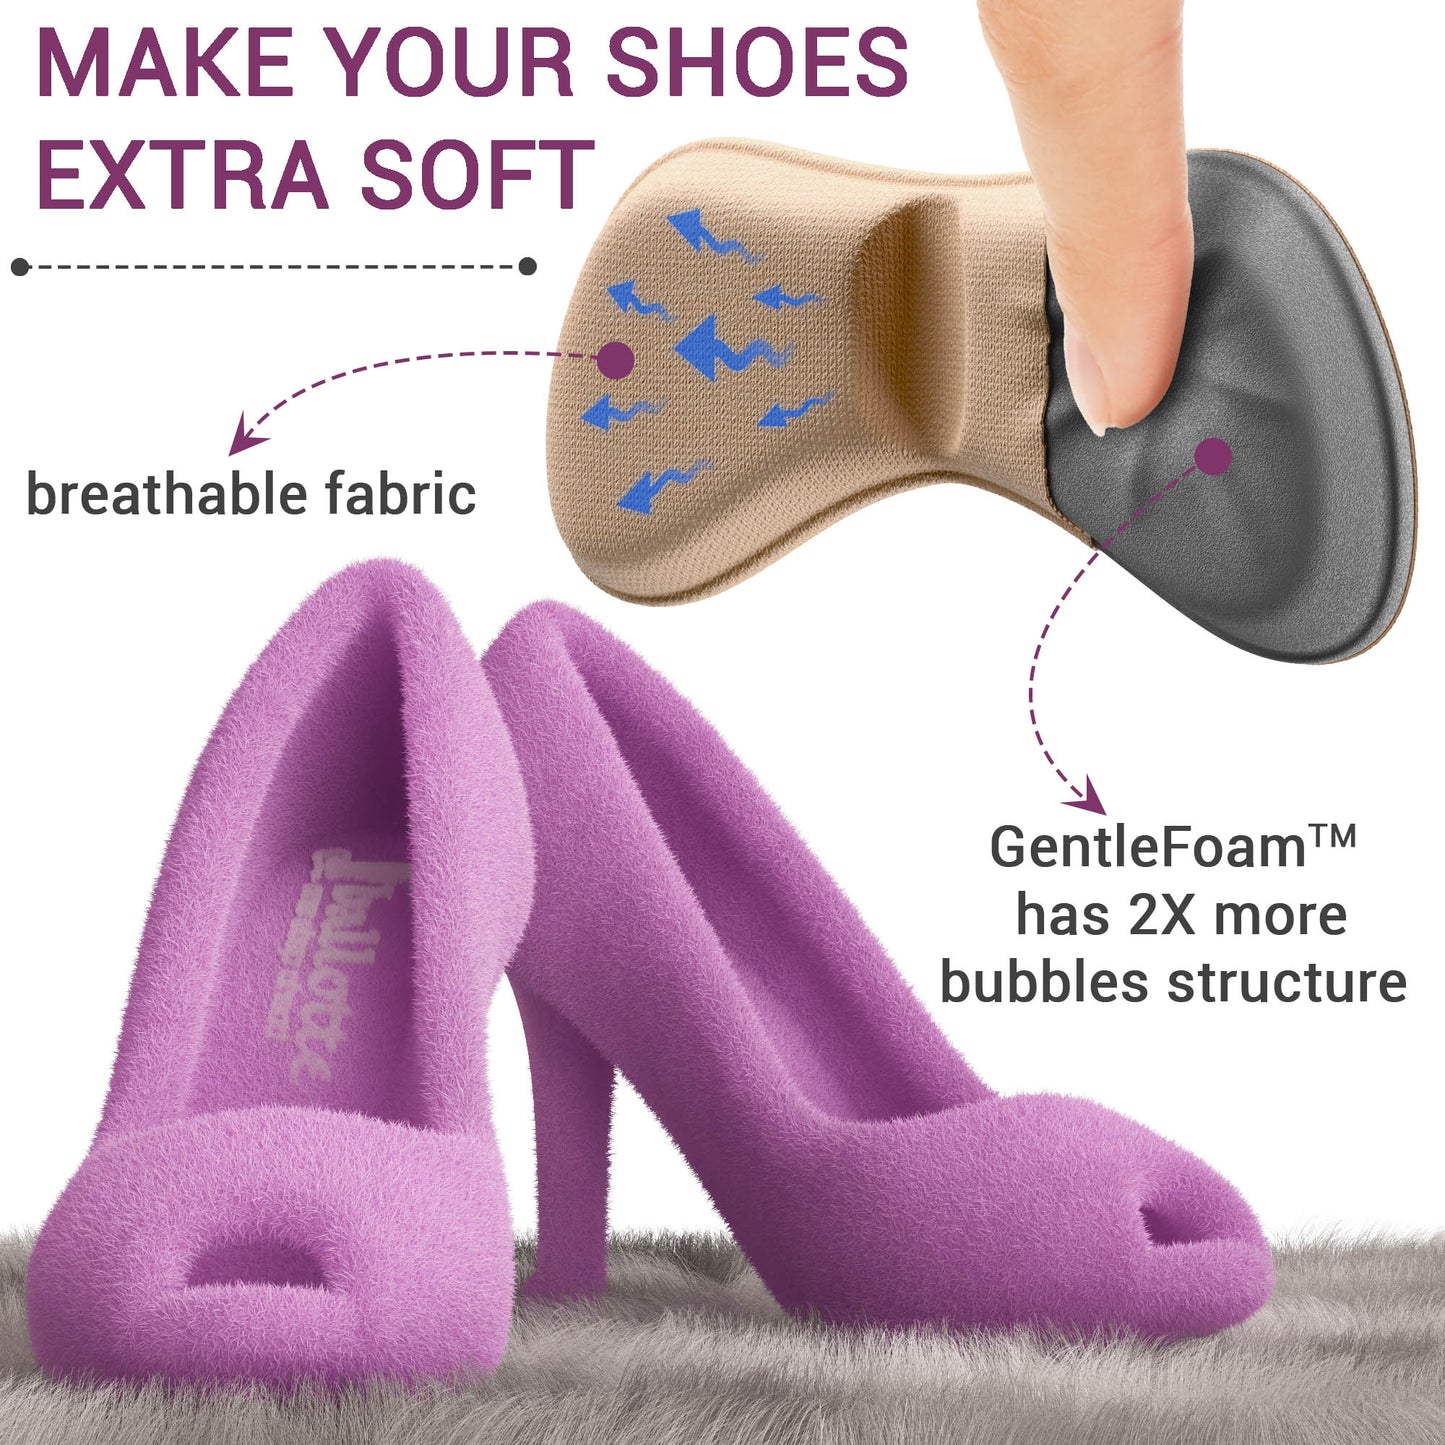 Extra soft heel grips (super sticky)